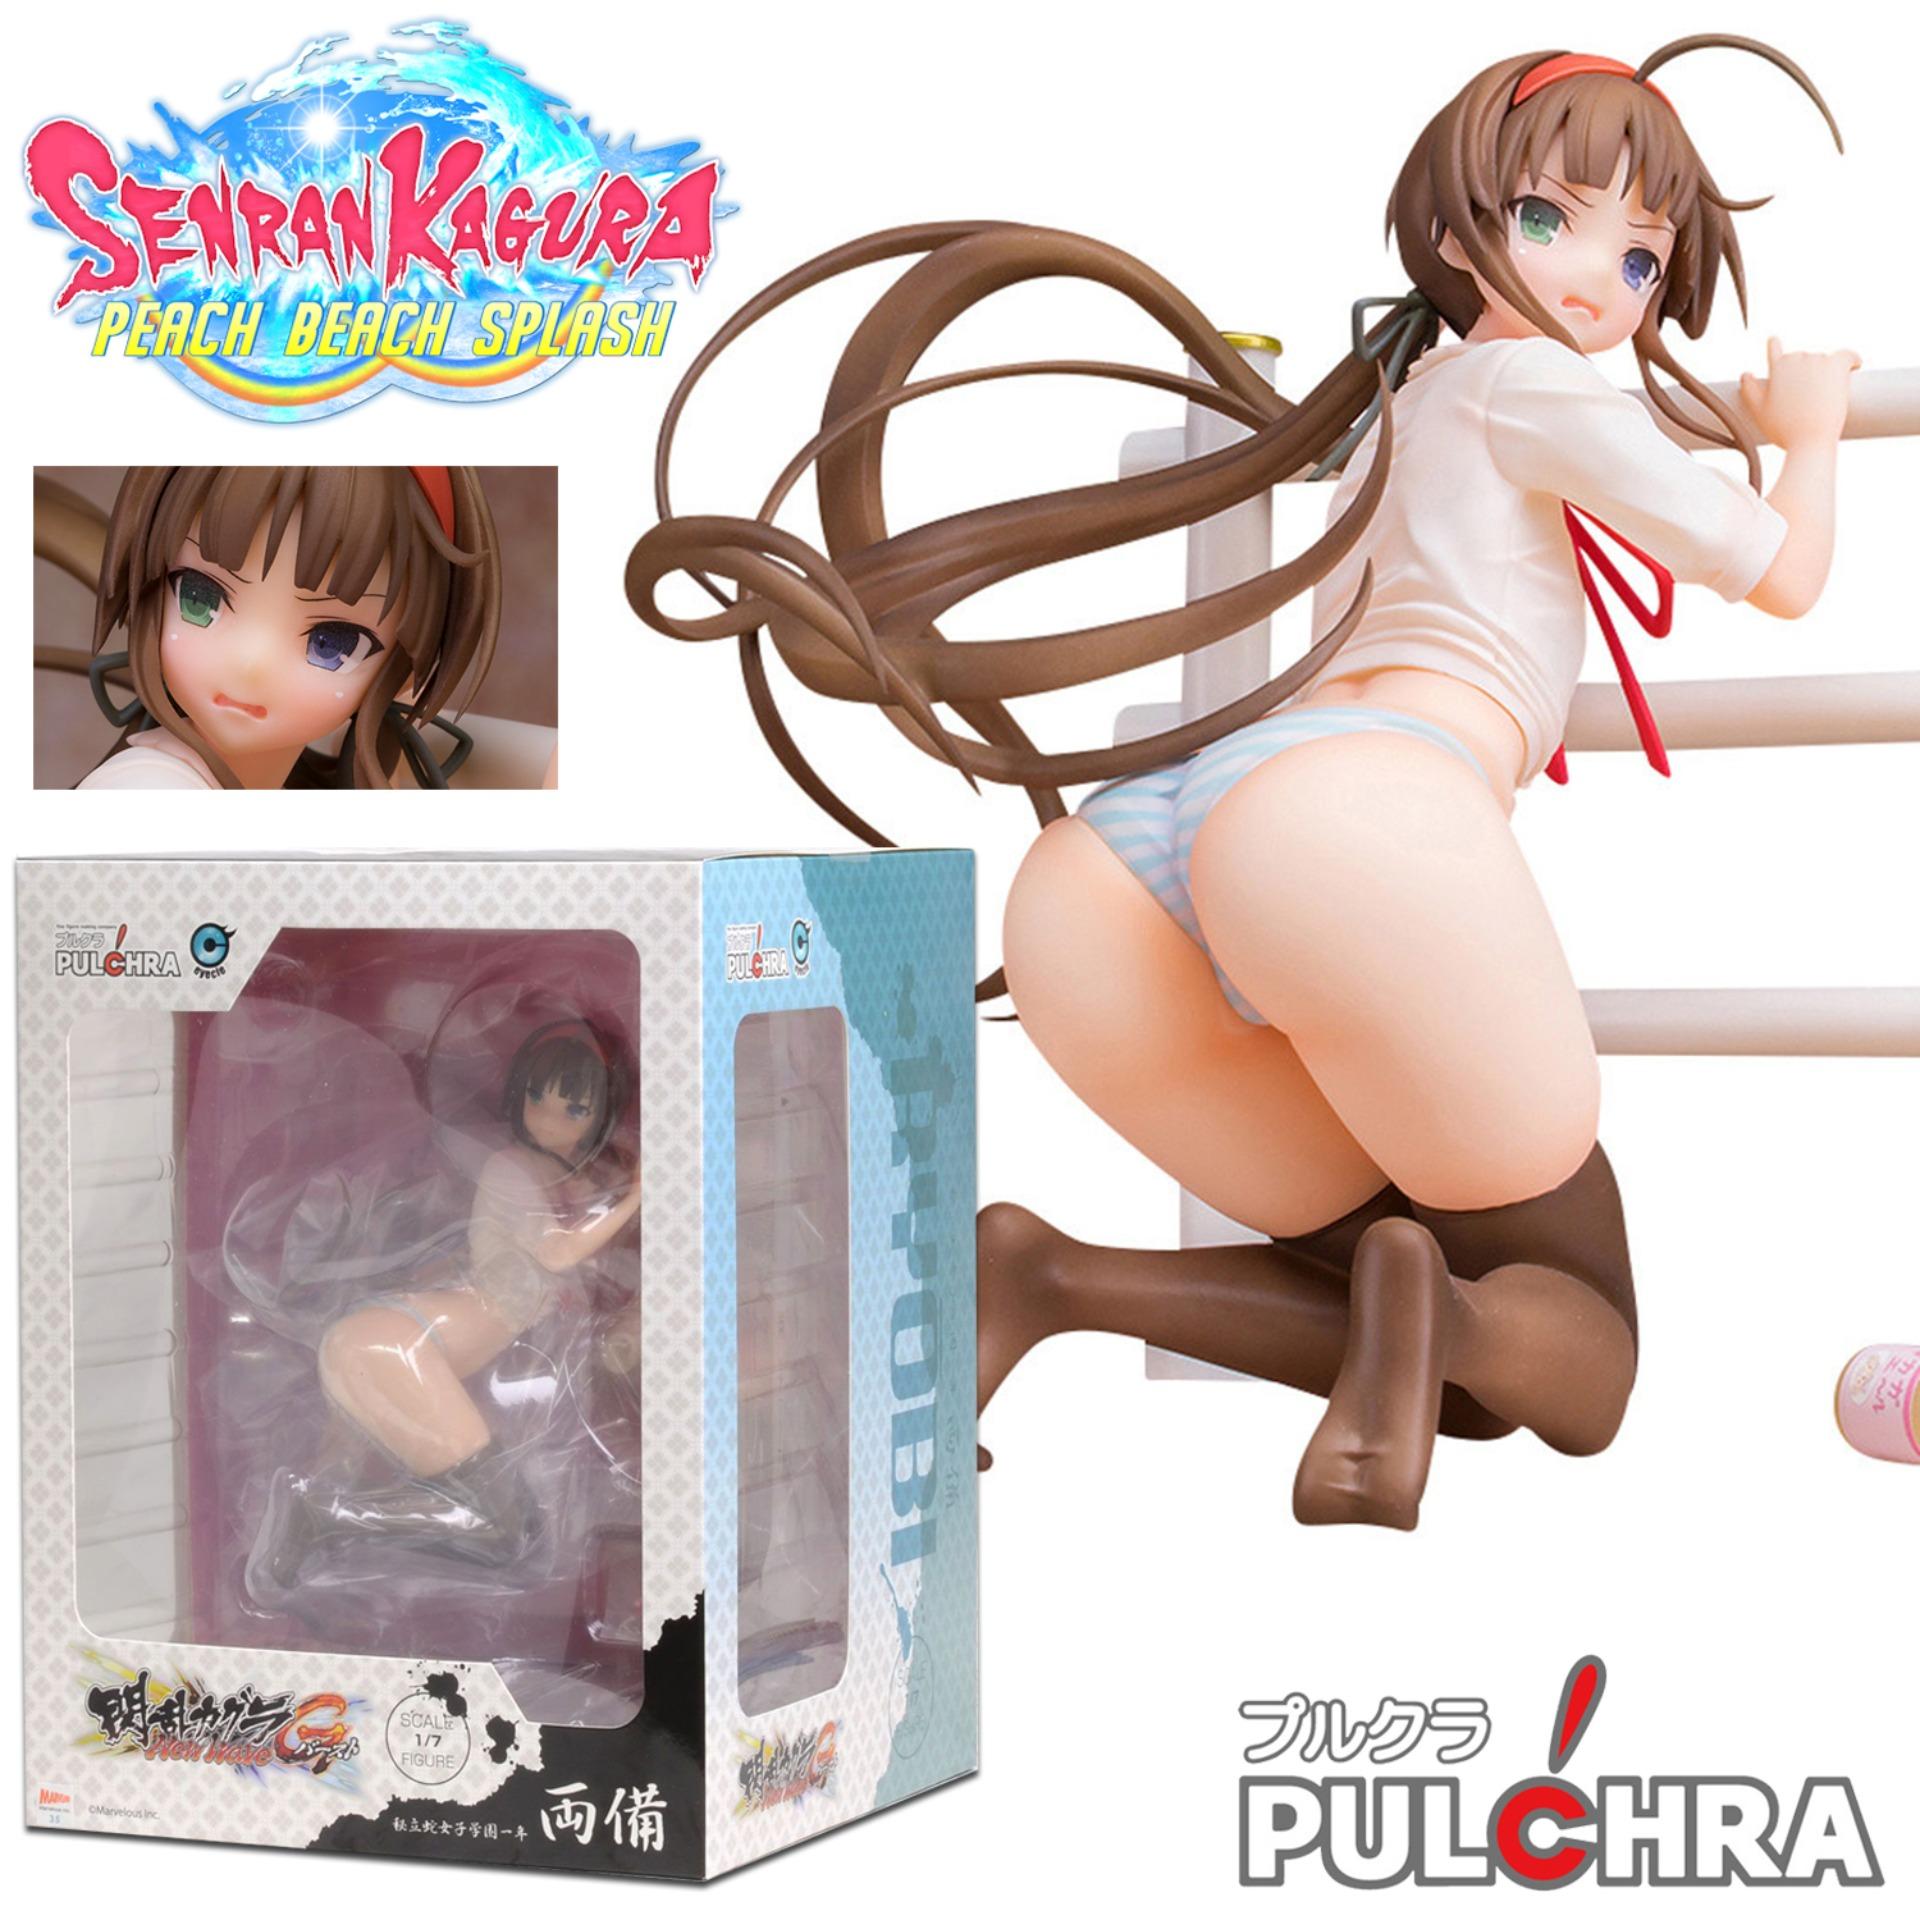 Model โมเดล งานแท้ 100% Pulchra Pusan Kamome จากซีรีส์วิดีโอเกม PS 4 Senran Kagura เซ็นรัน คางุระ สถาบันฝึกอบรม นินจาสาว Ryobi เรียวโอบิ 1/7 Scale Ver Figure ฟิกเกอร์ Anime อนิเมะ การ์ตูน มังงะ Doll ตุ๊กตา คอลเลกชัน สั่งและนำเข้าจากญี่ปุ่น manga